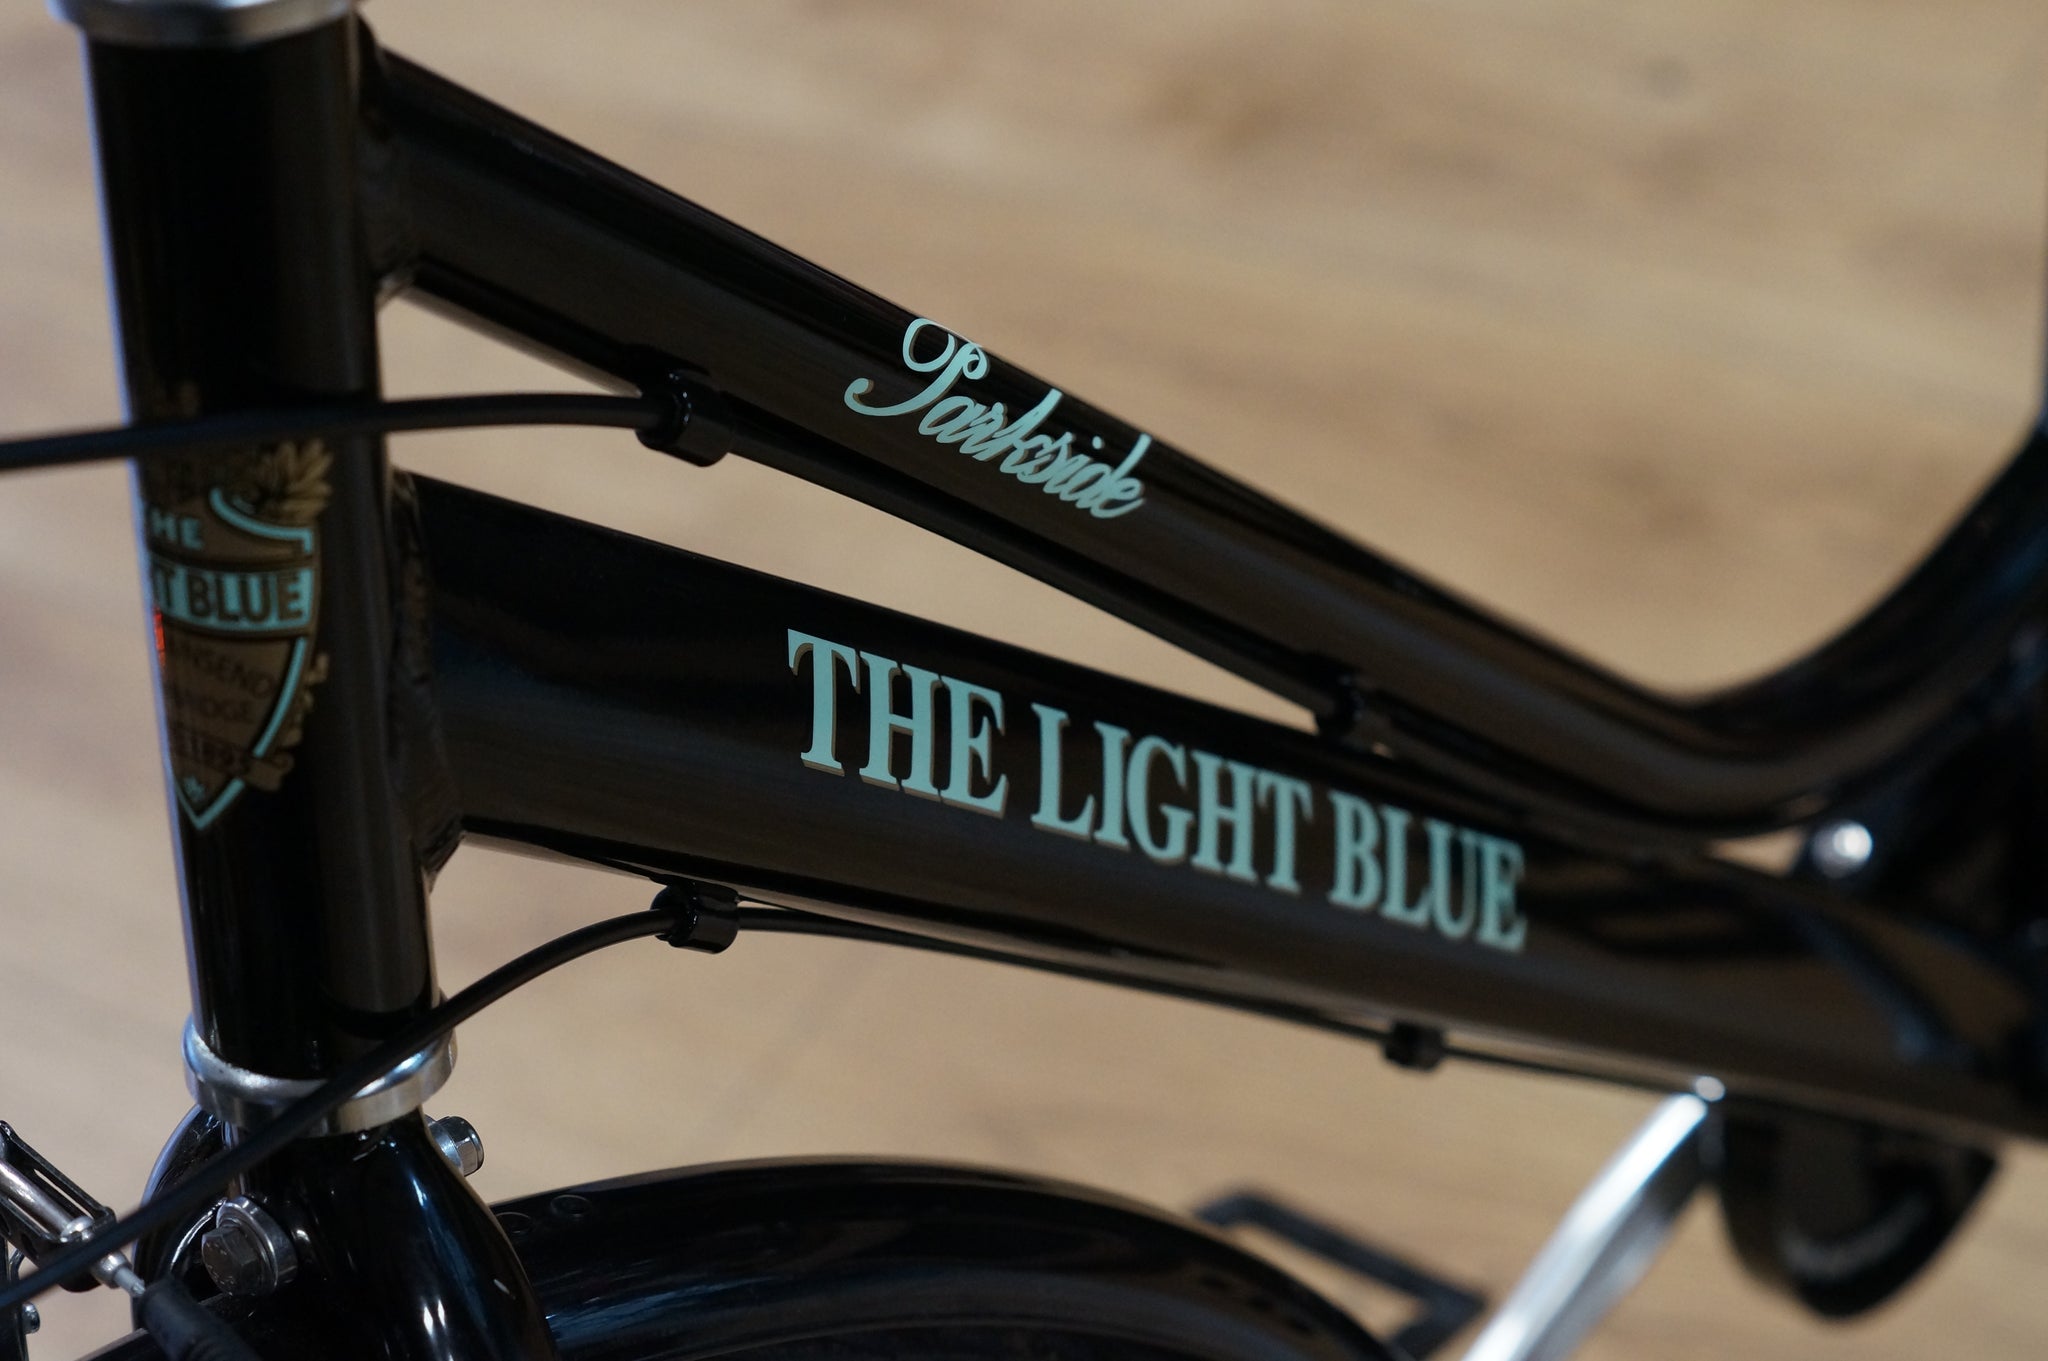 The Light Blue Hybrid Bike - Large